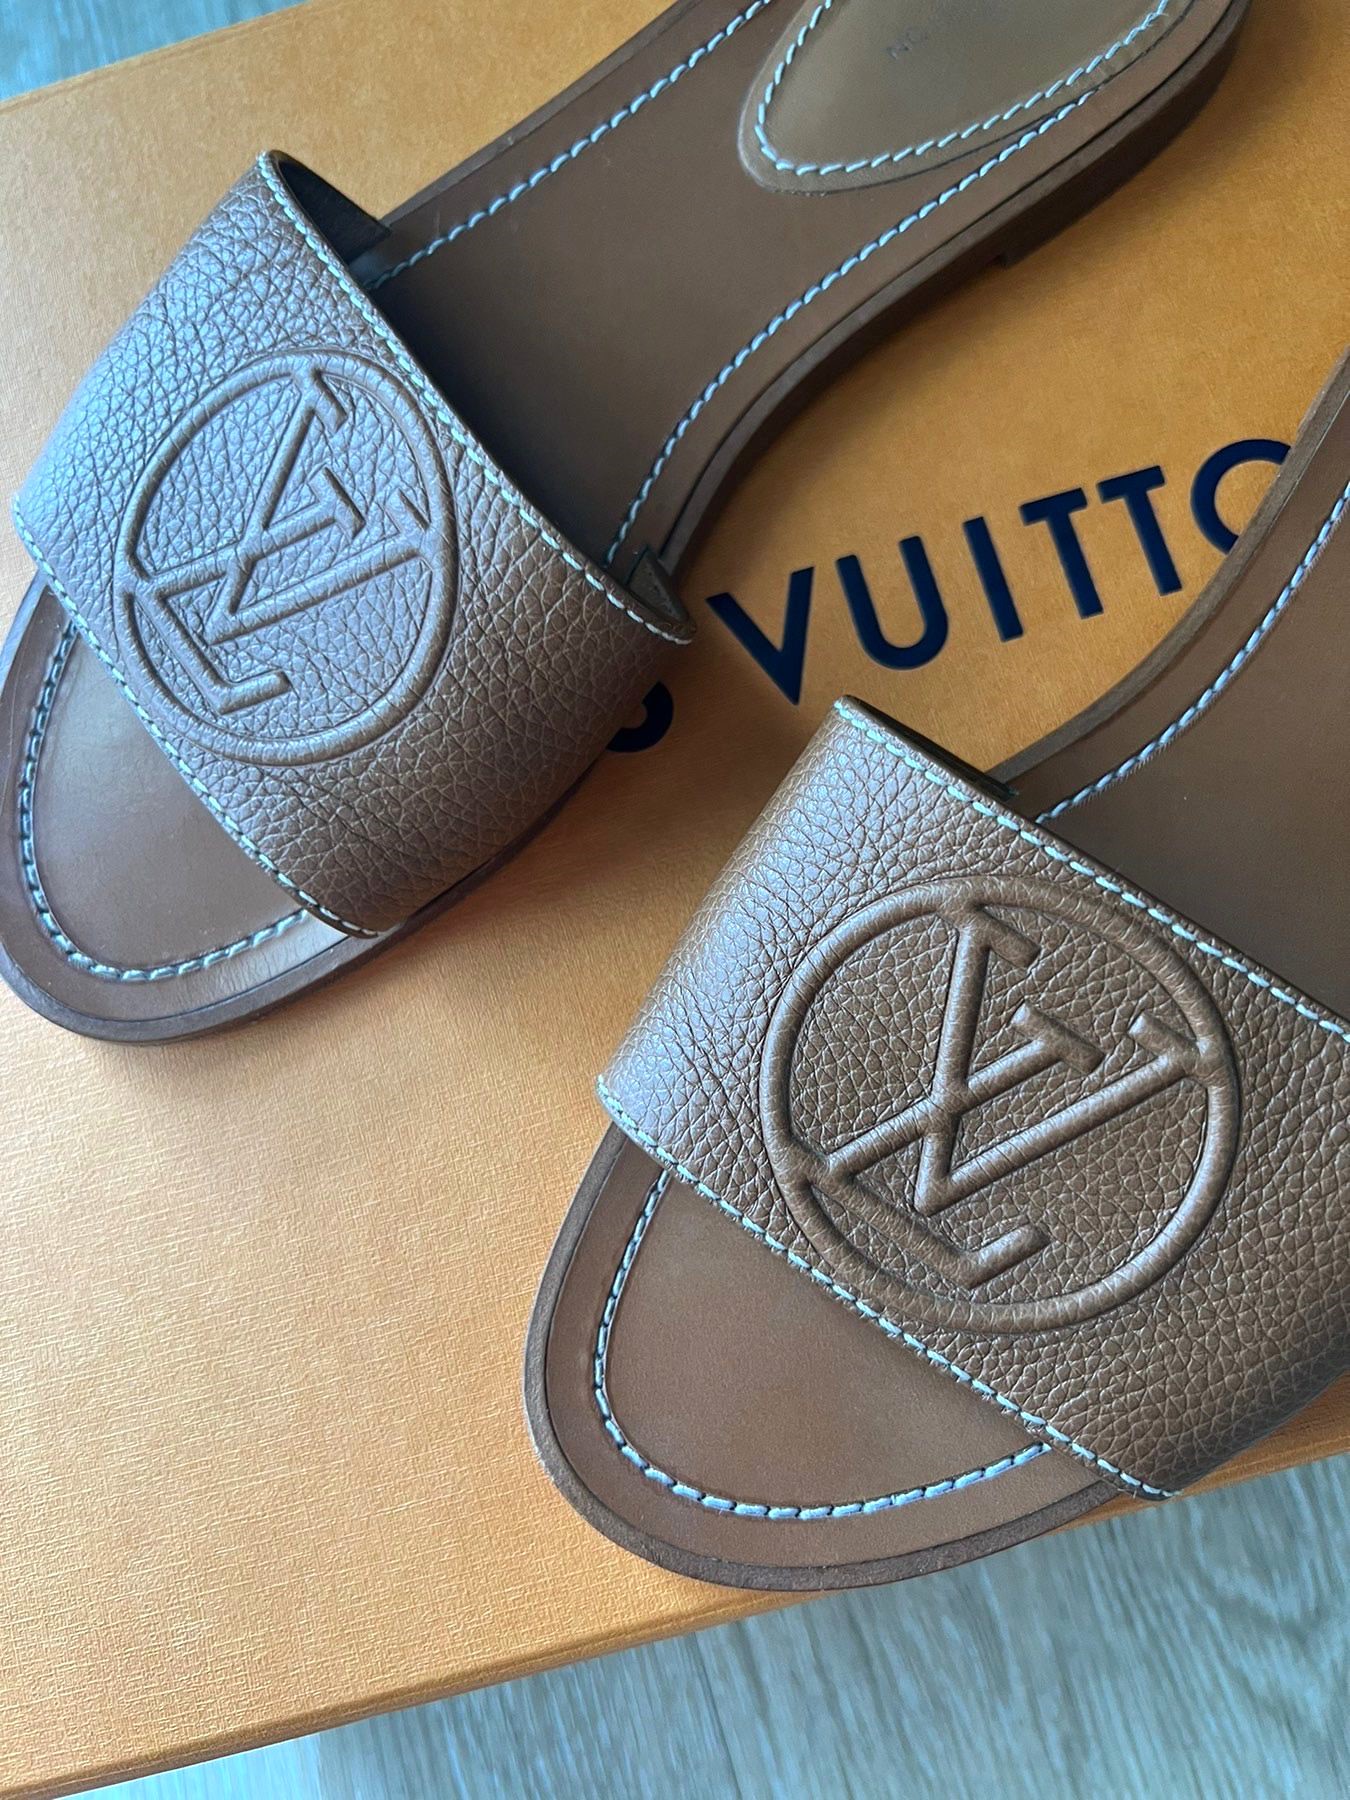 Lock it leather mules Louis Vuitton Beige size 38 EU in Leather - 35108189